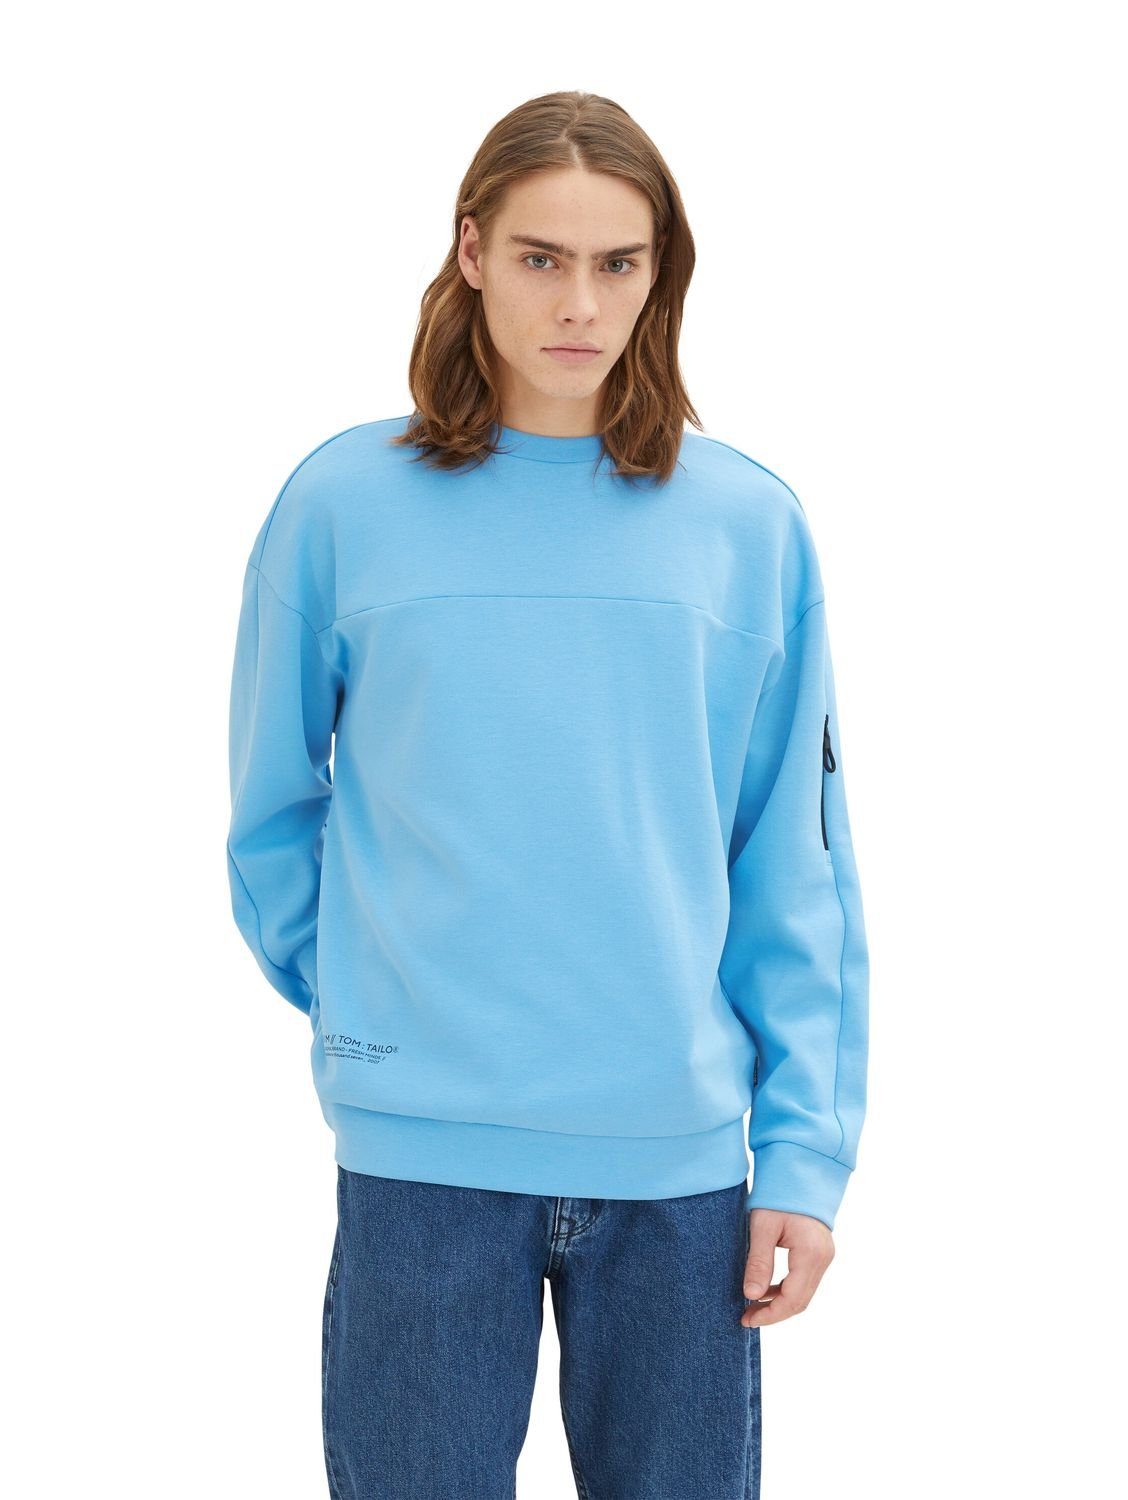 TOM TAILOR Denim Sweatshirt RELAXED CREW aus Baumwolle Rainy Sky Blue 18395